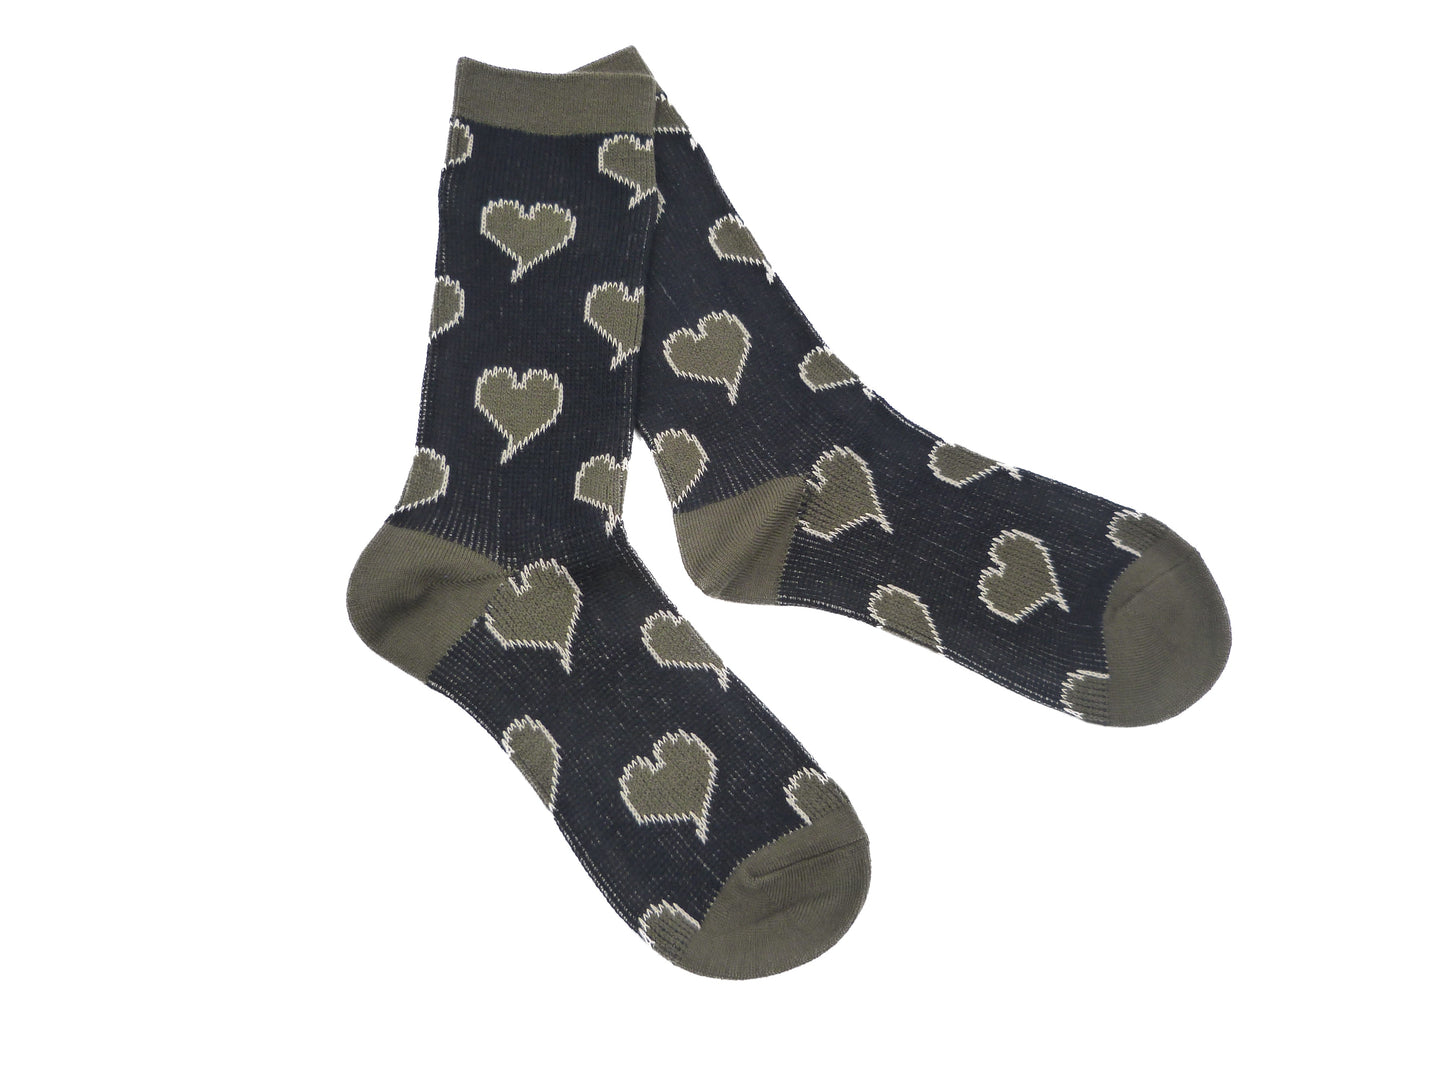 Love Heart Pattern Printed Socks